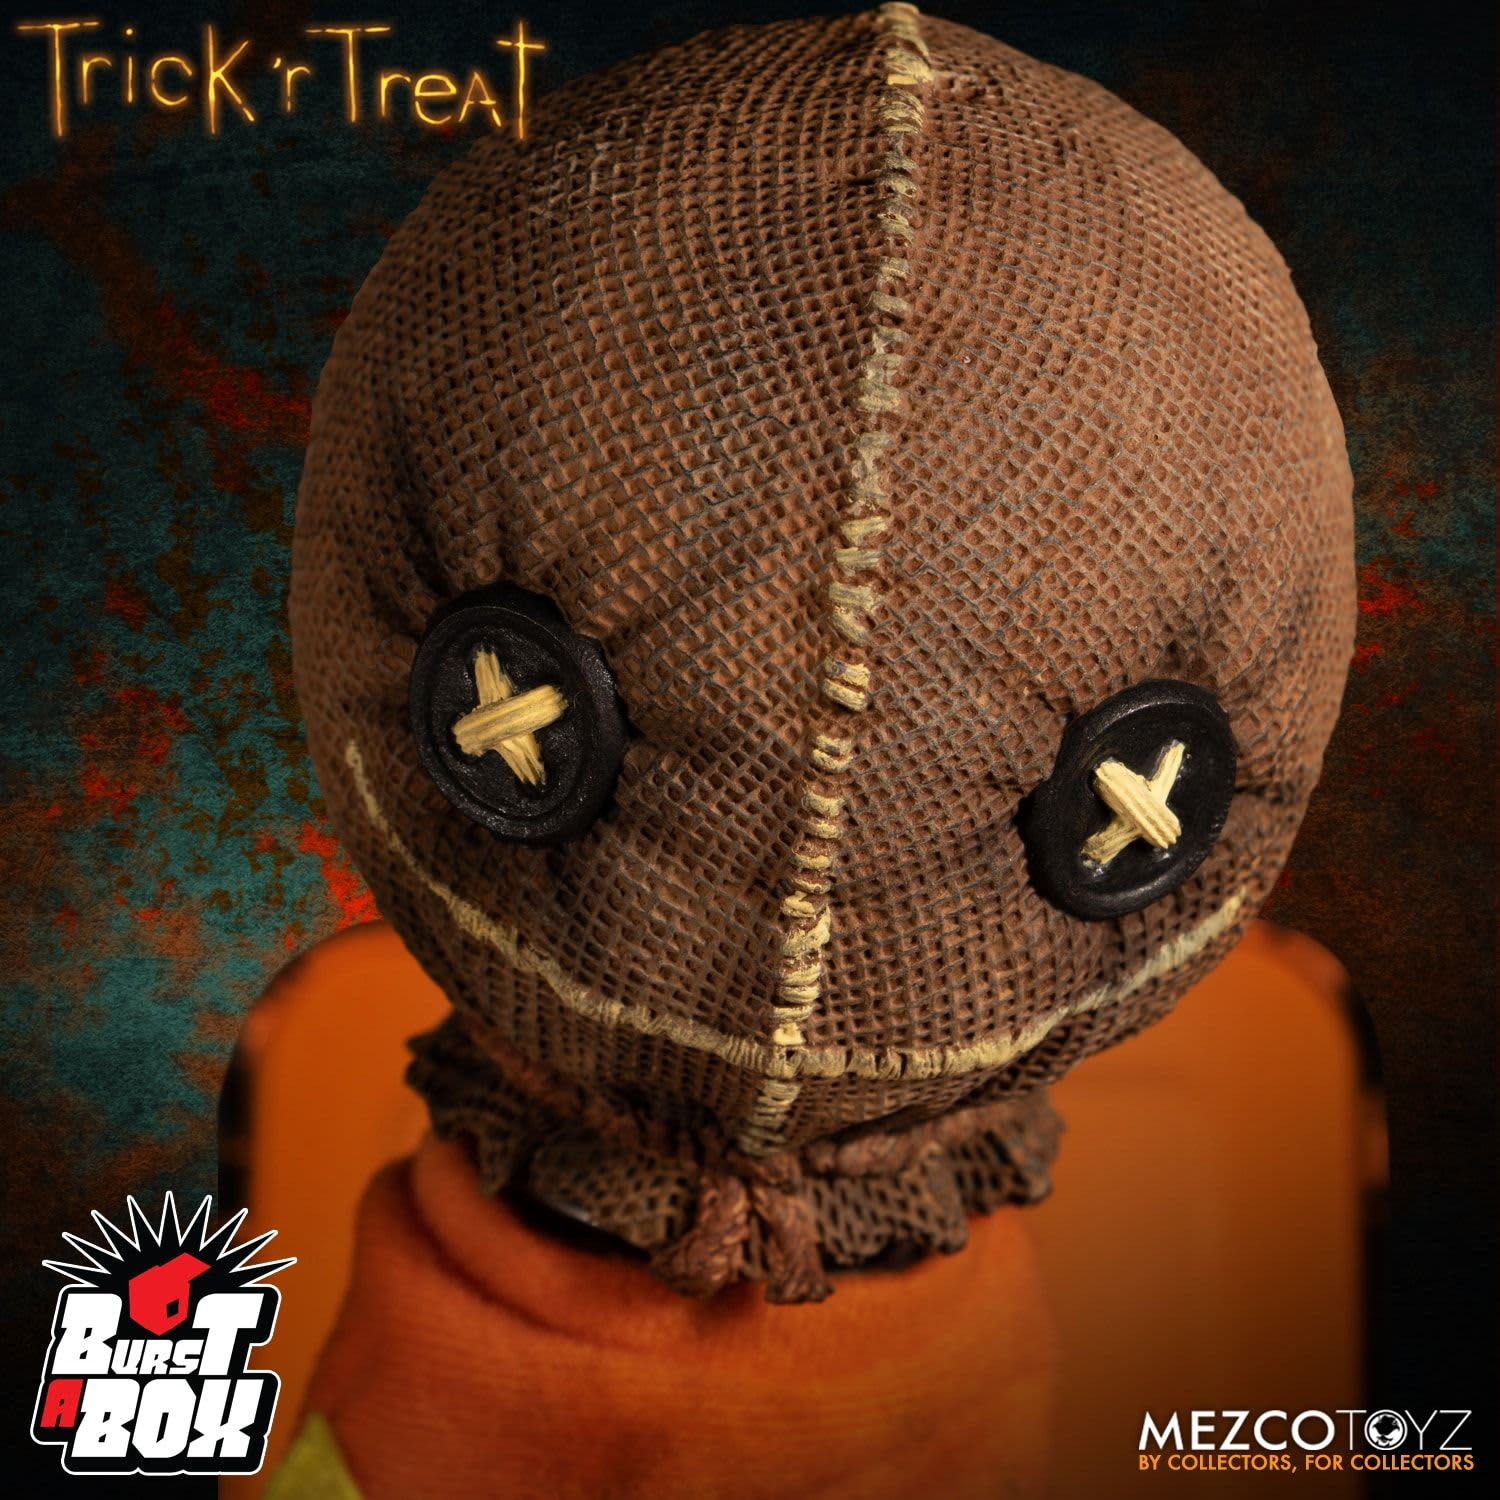 Mezco Toyz Sam Burst-a-Box Trick 'r Treat Standard 